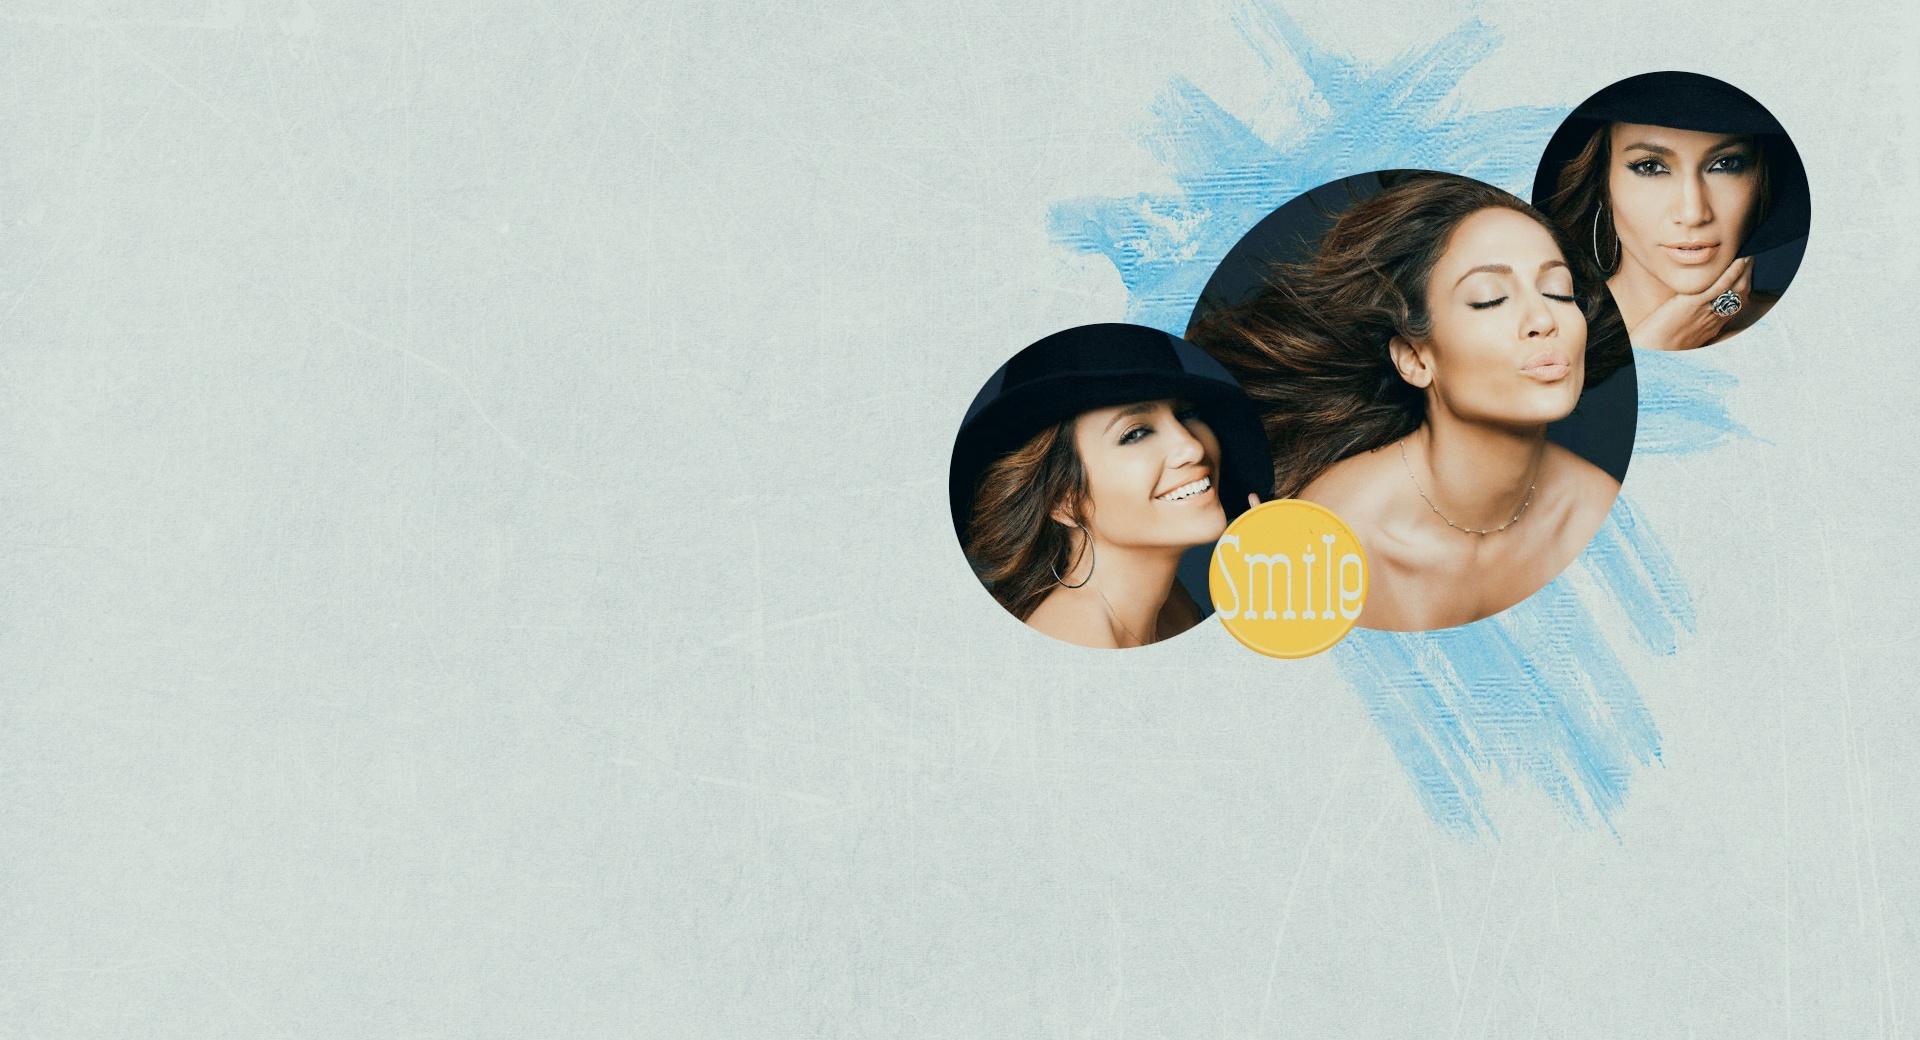 Jennifer Lopez Smile at 1152 x 864 size wallpapers HD quality